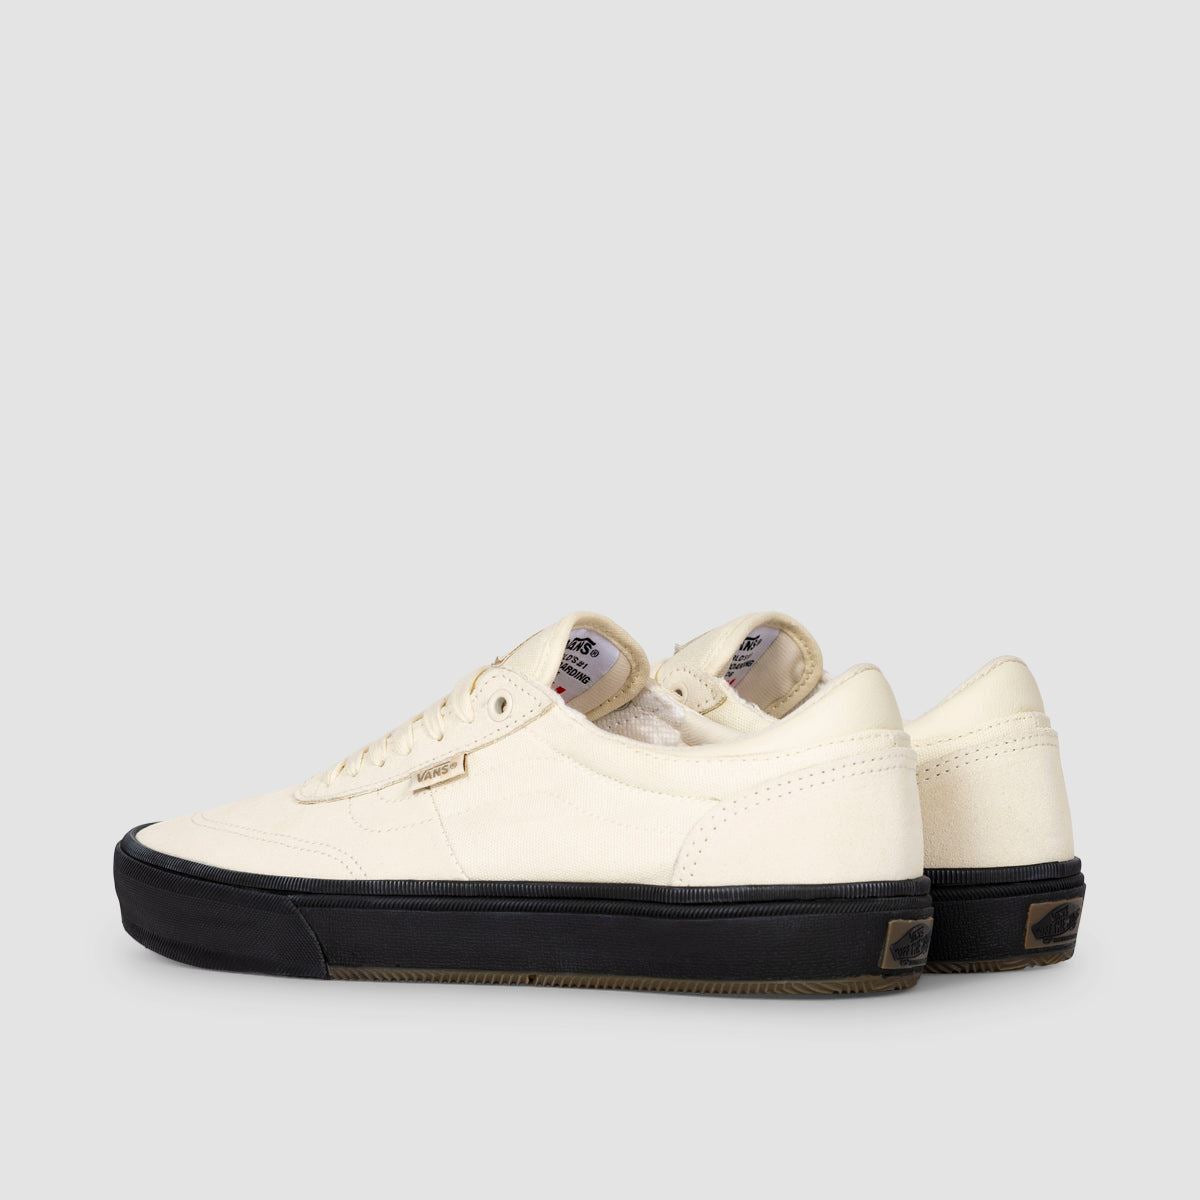 Vans Gilbert Shoes - Crockett Antique White/Black